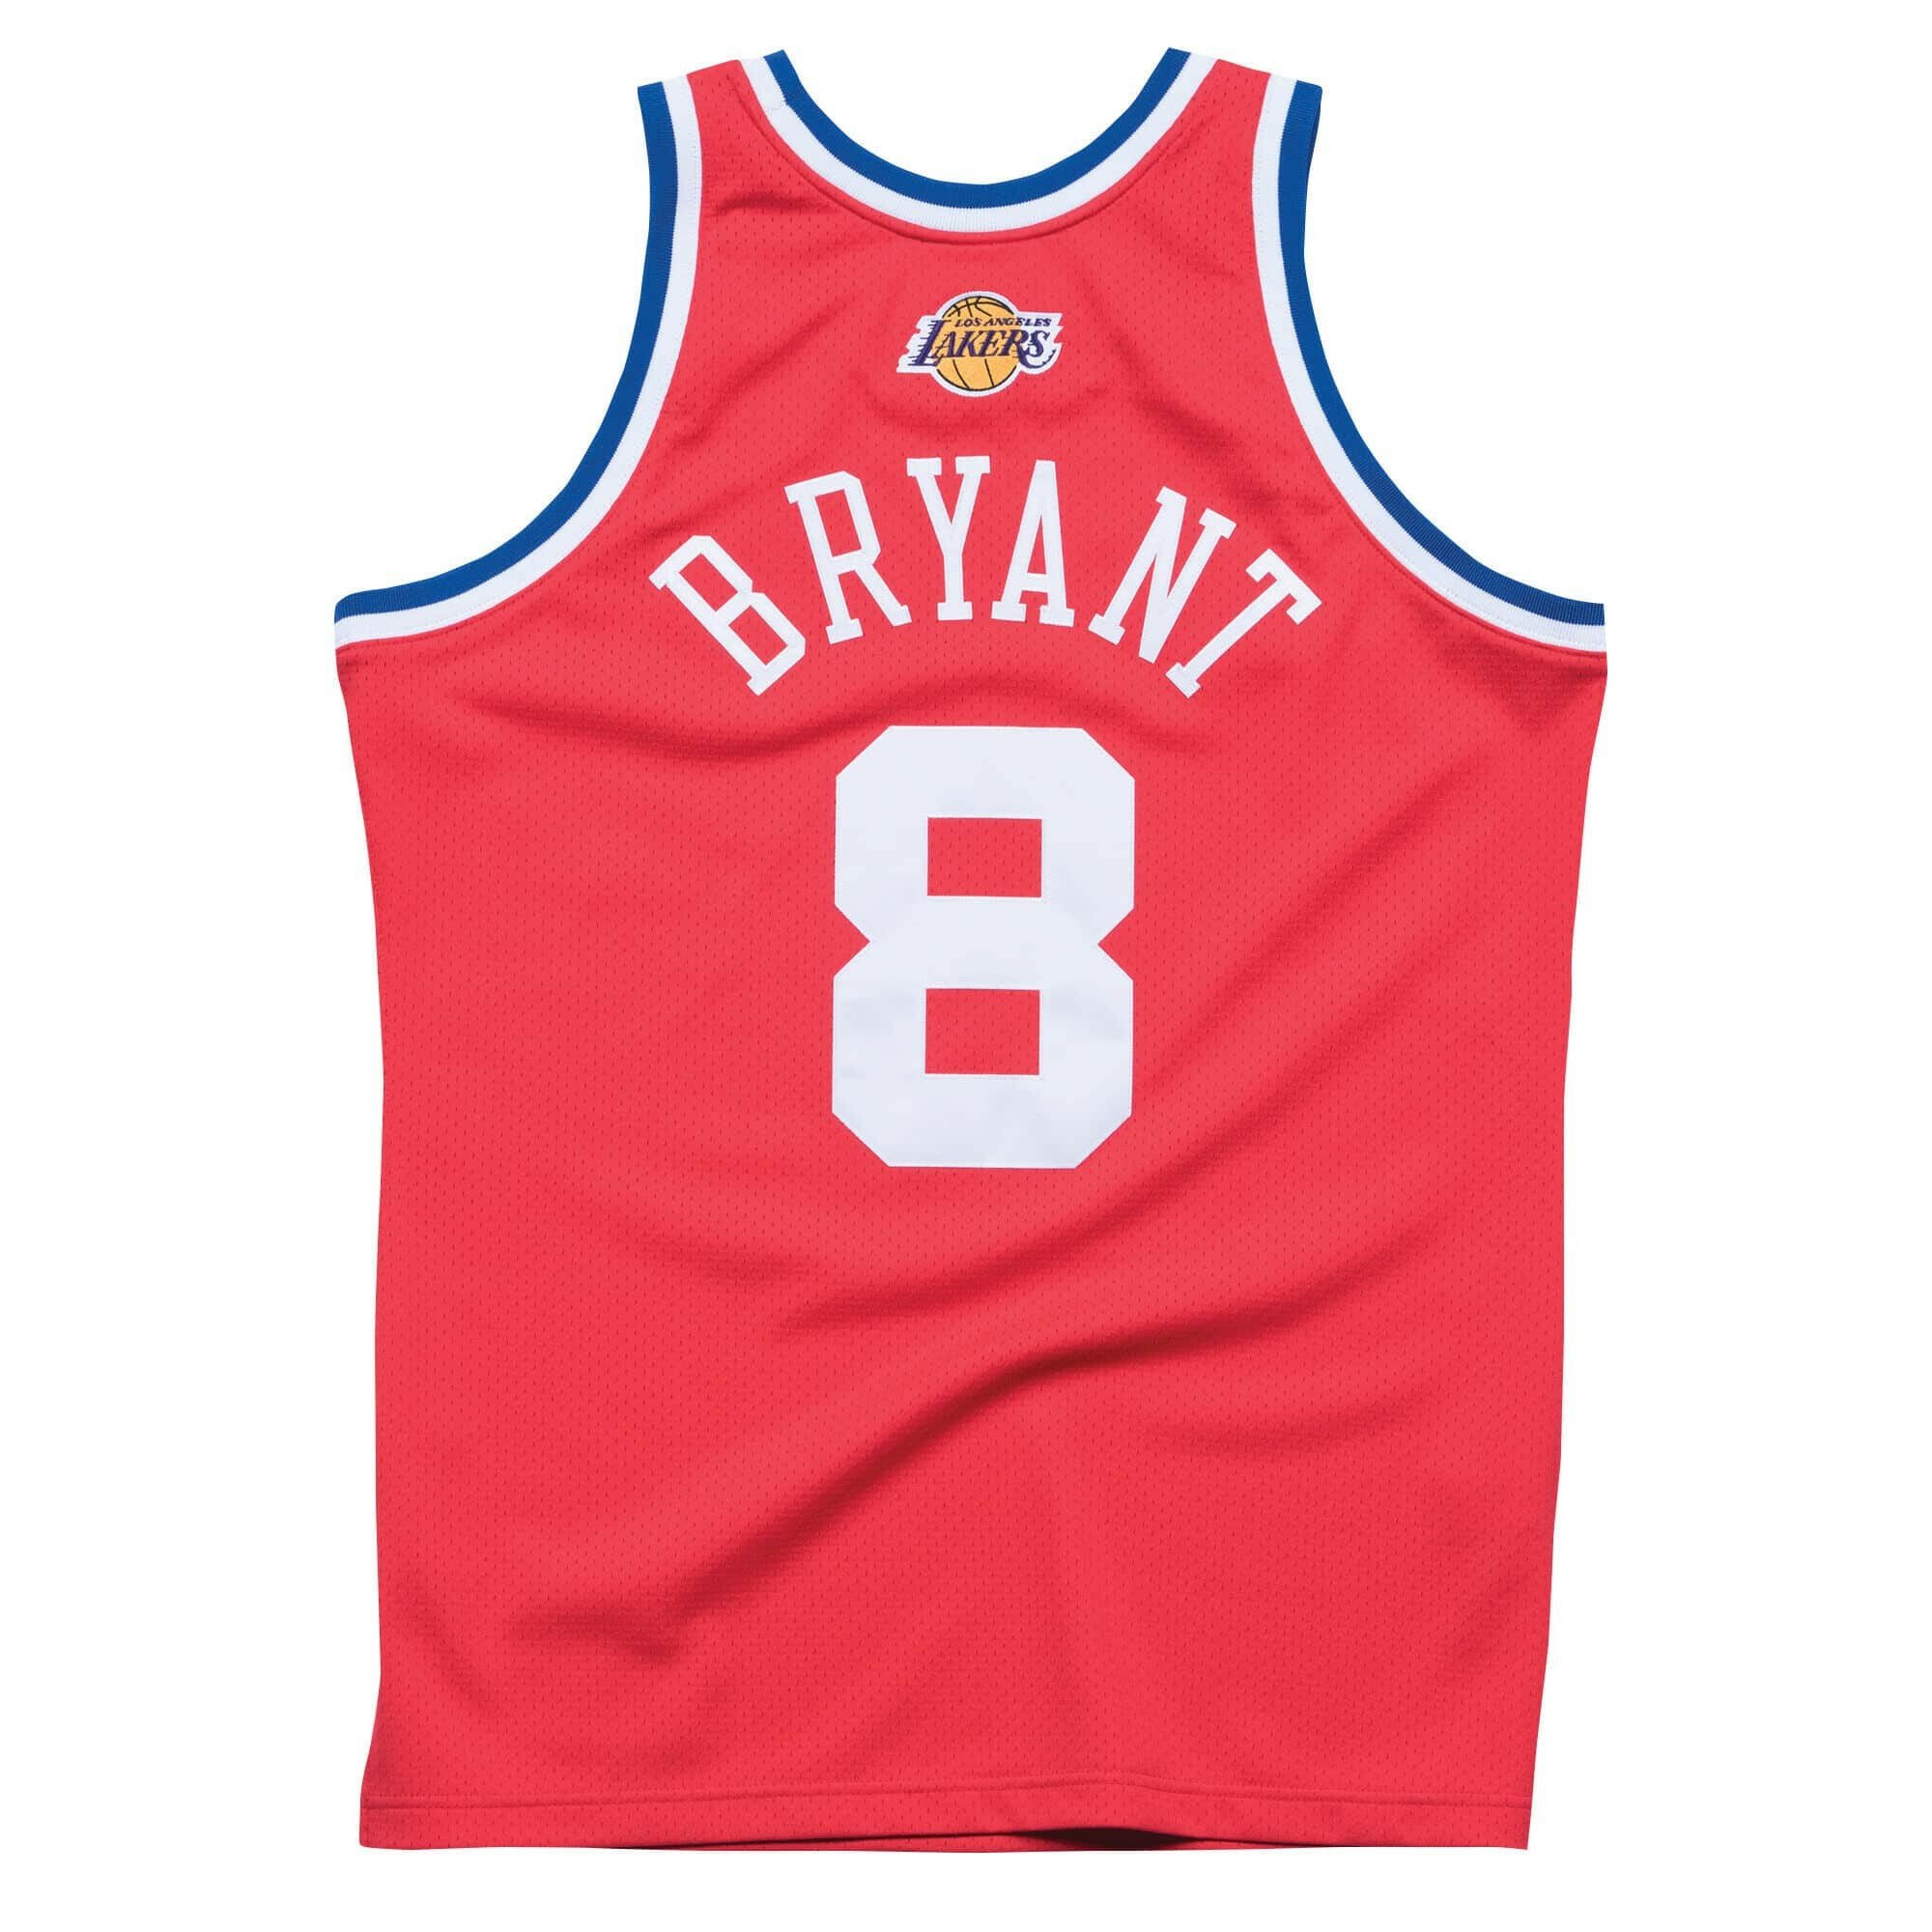 NIKE【XL】Kobe Bryant 04s all star jersey | kensysgas.com